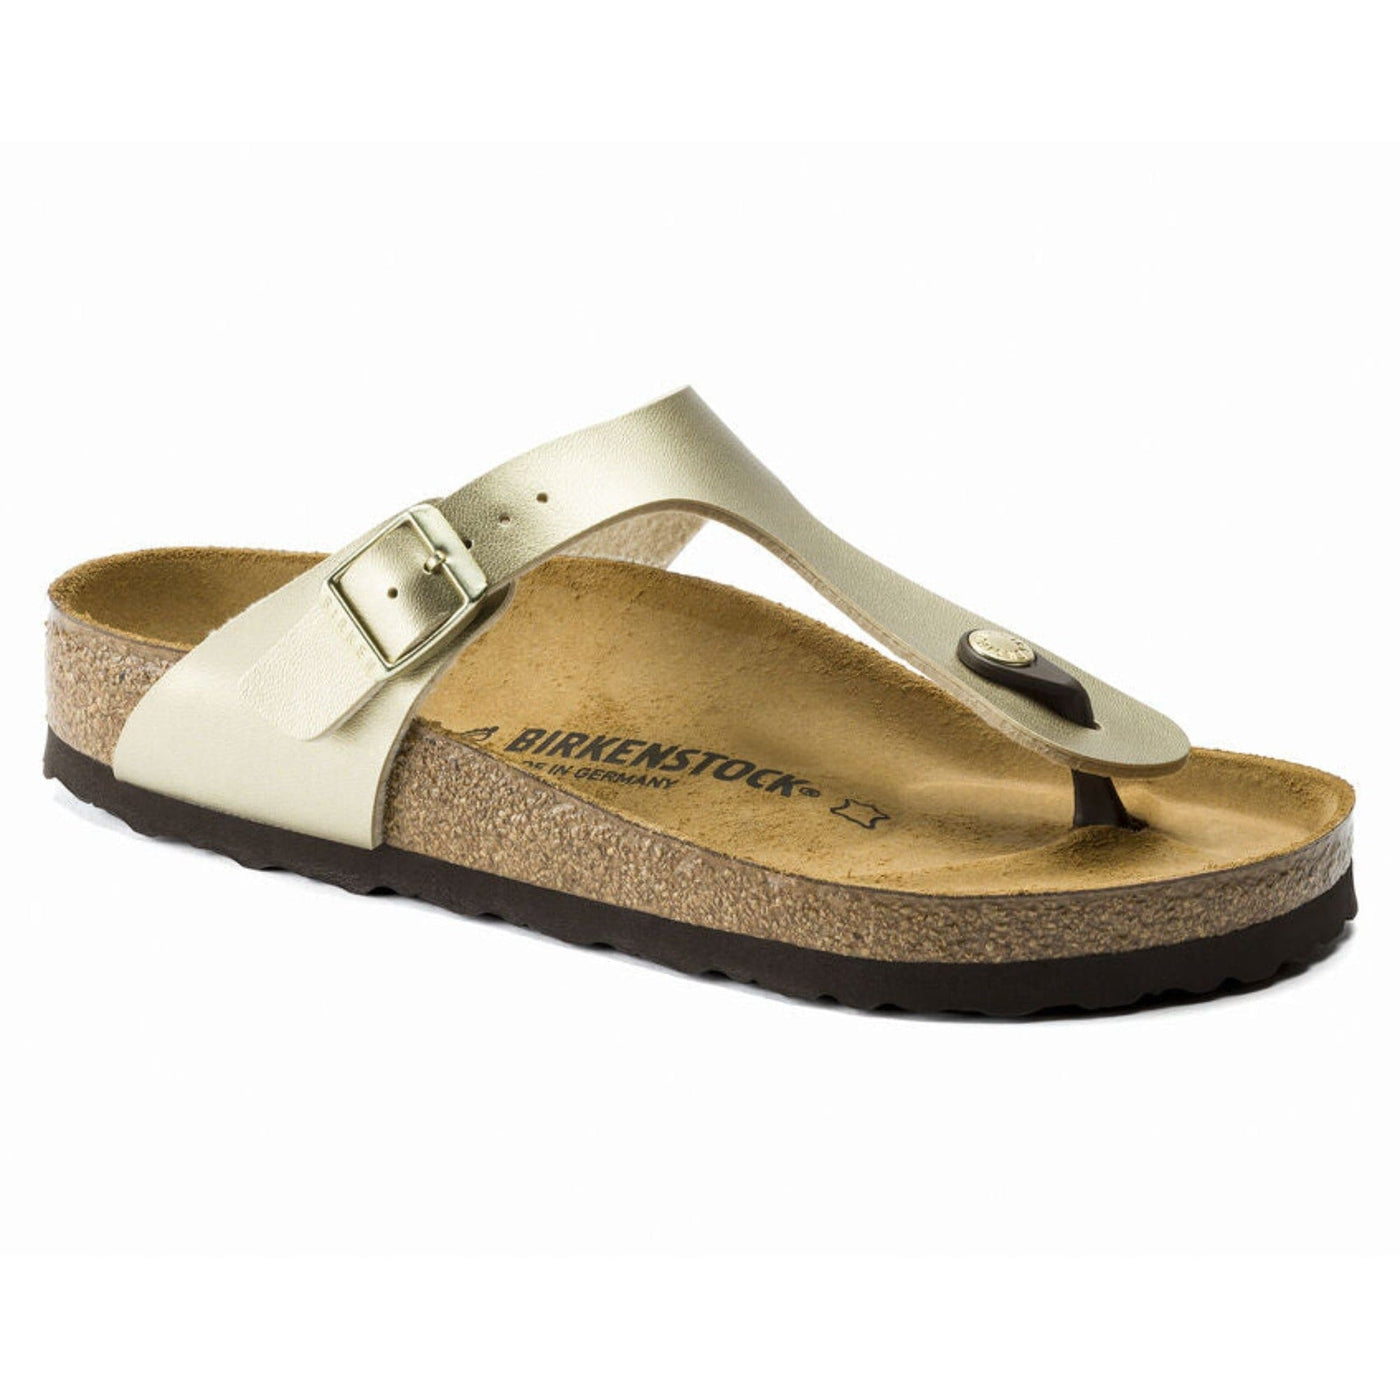 Birkenstock Womens Sandals Slip-on Flip-flop Shoes - Metallic Gold (size 8) -